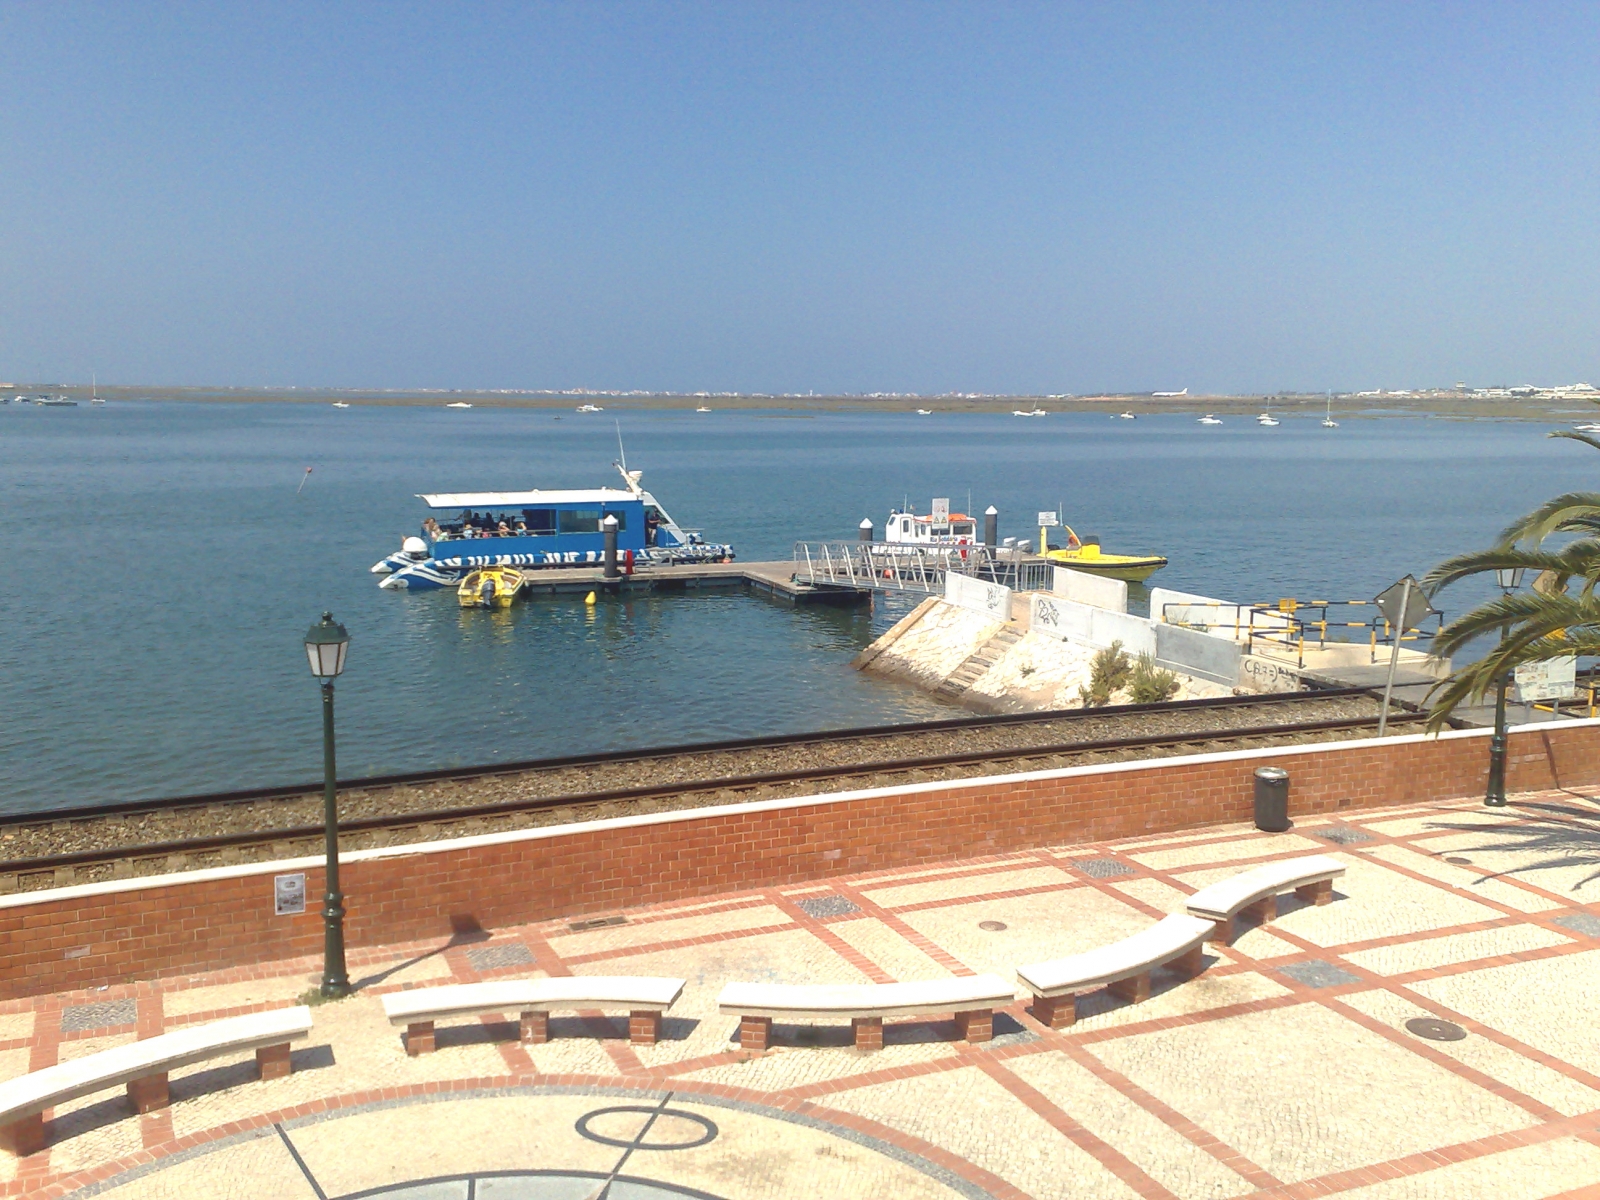 Faro: Quay 